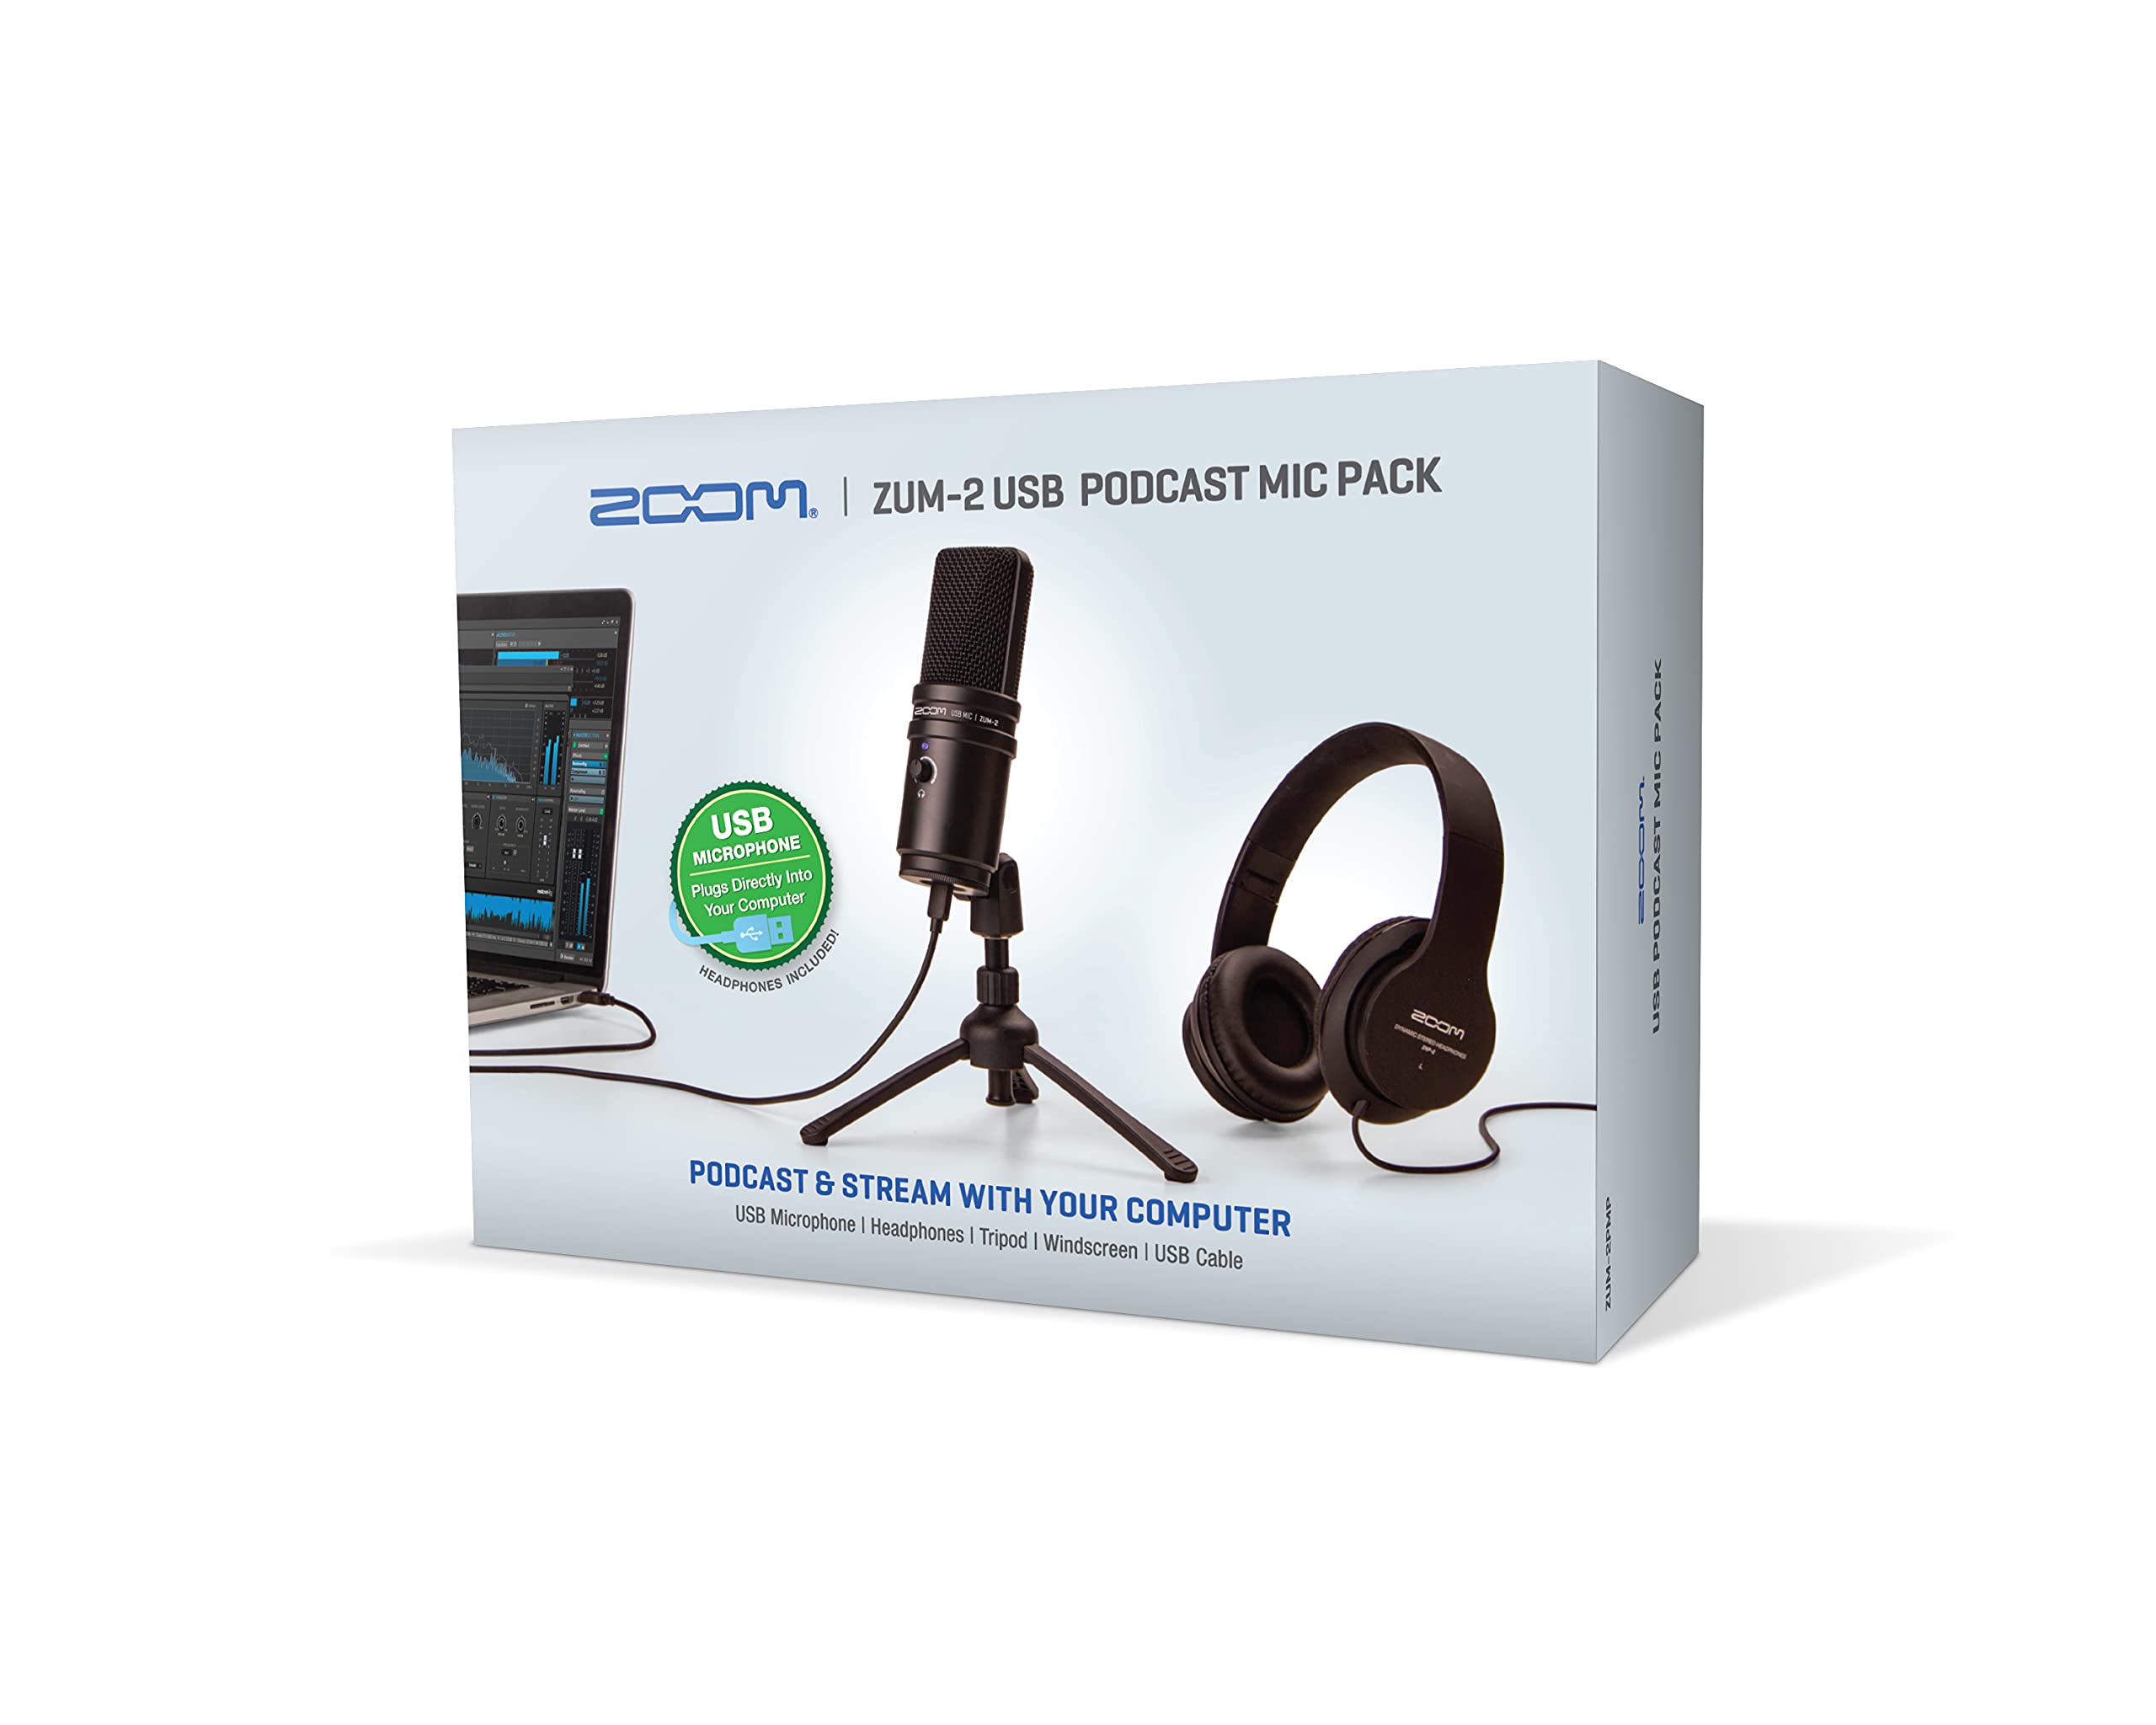 Zoom ZUM-2 播客麦克风包、播客 USB 麦克风、耳机、三脚架、防风罩、USB 线，用于录制和串流播客、音乐、画外音等